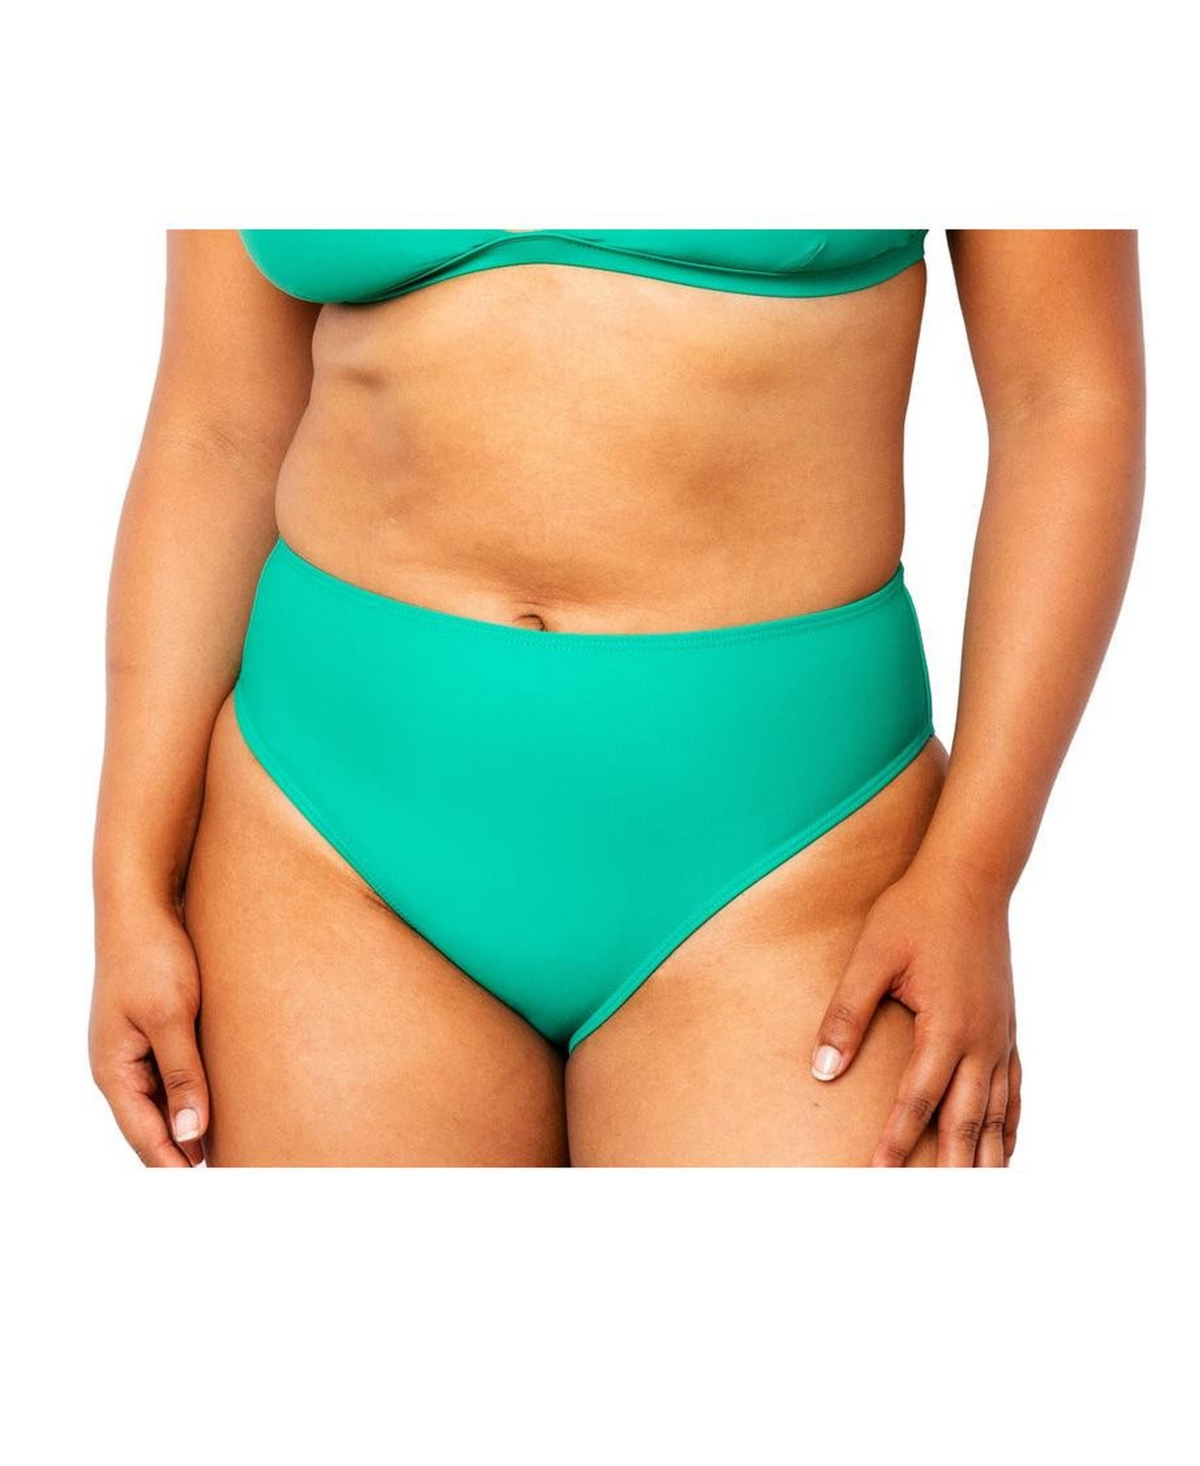 Women's Colette High Waisted Bikini Bottom - Emerald green